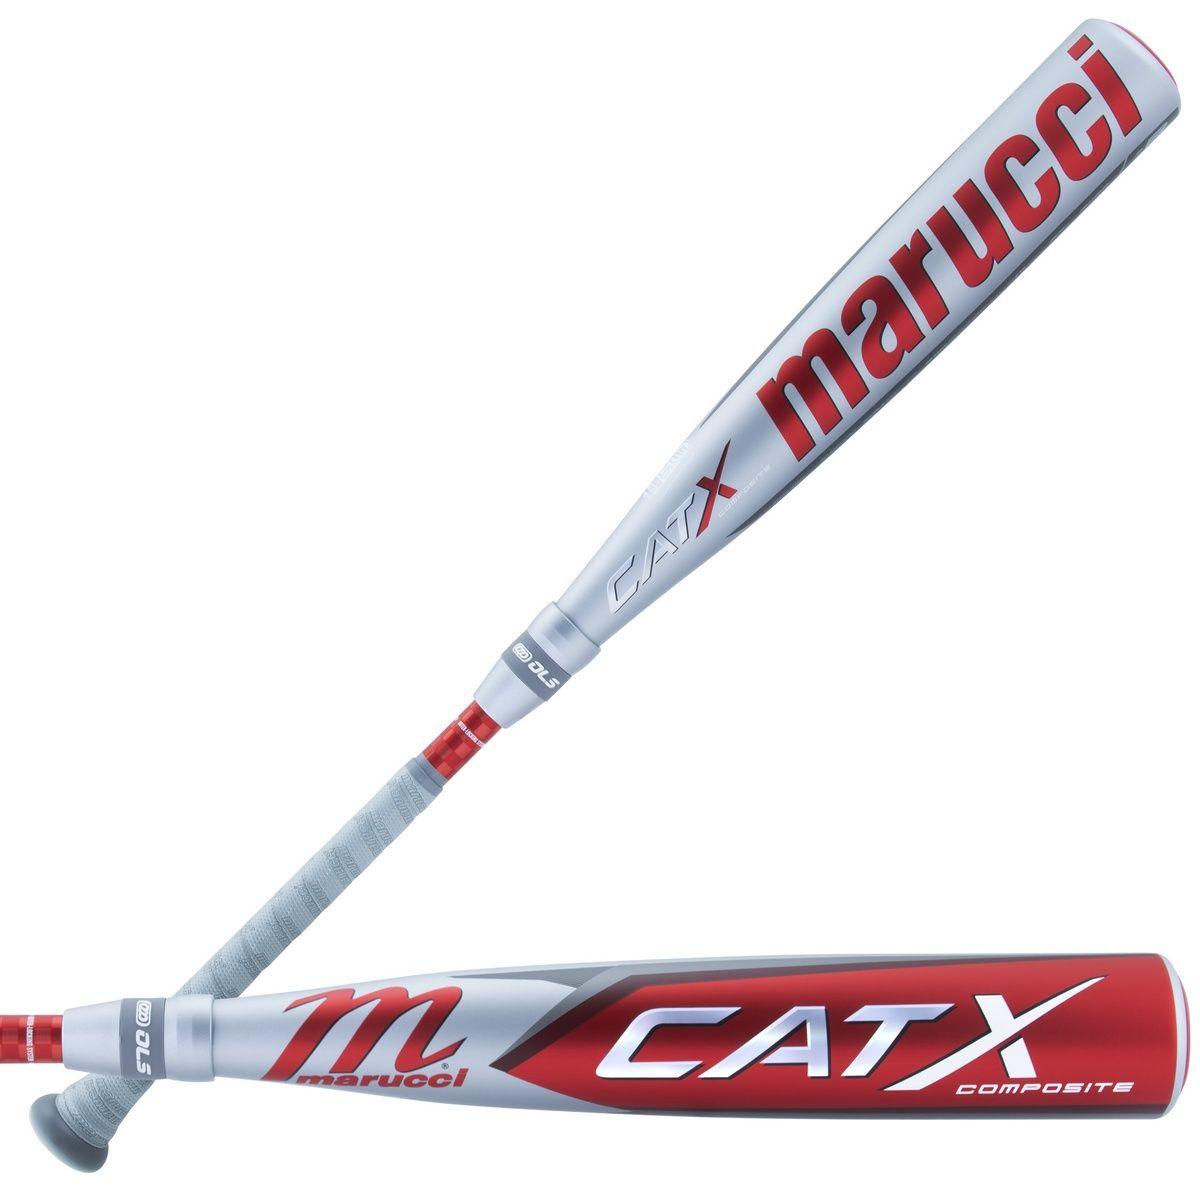 Marucci CATX Composite Senior League (-8) USSSA Baseball Bat: MSBCCPX8